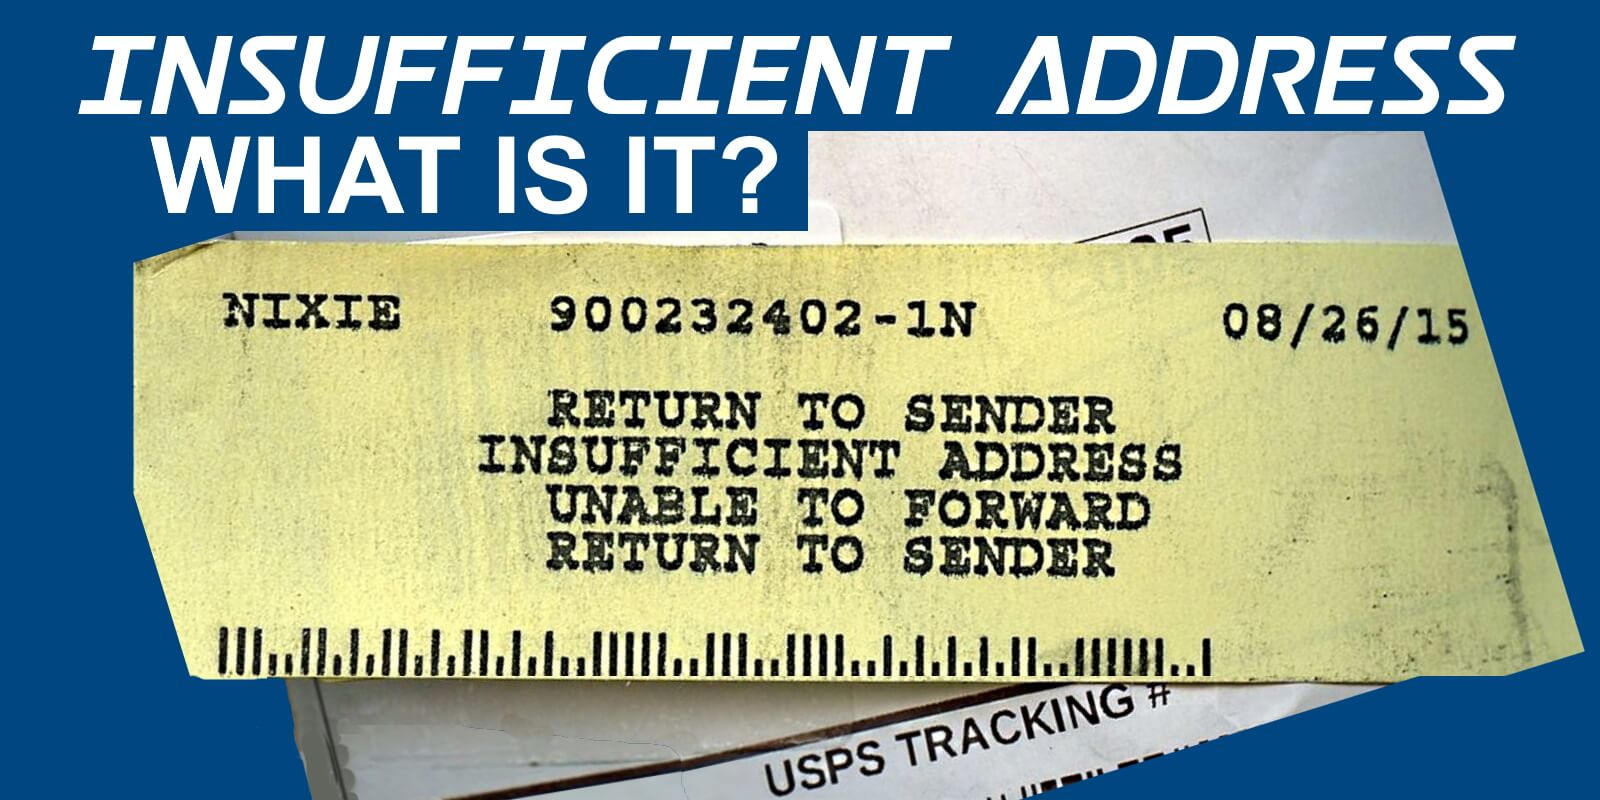 USPS Insufficient Address